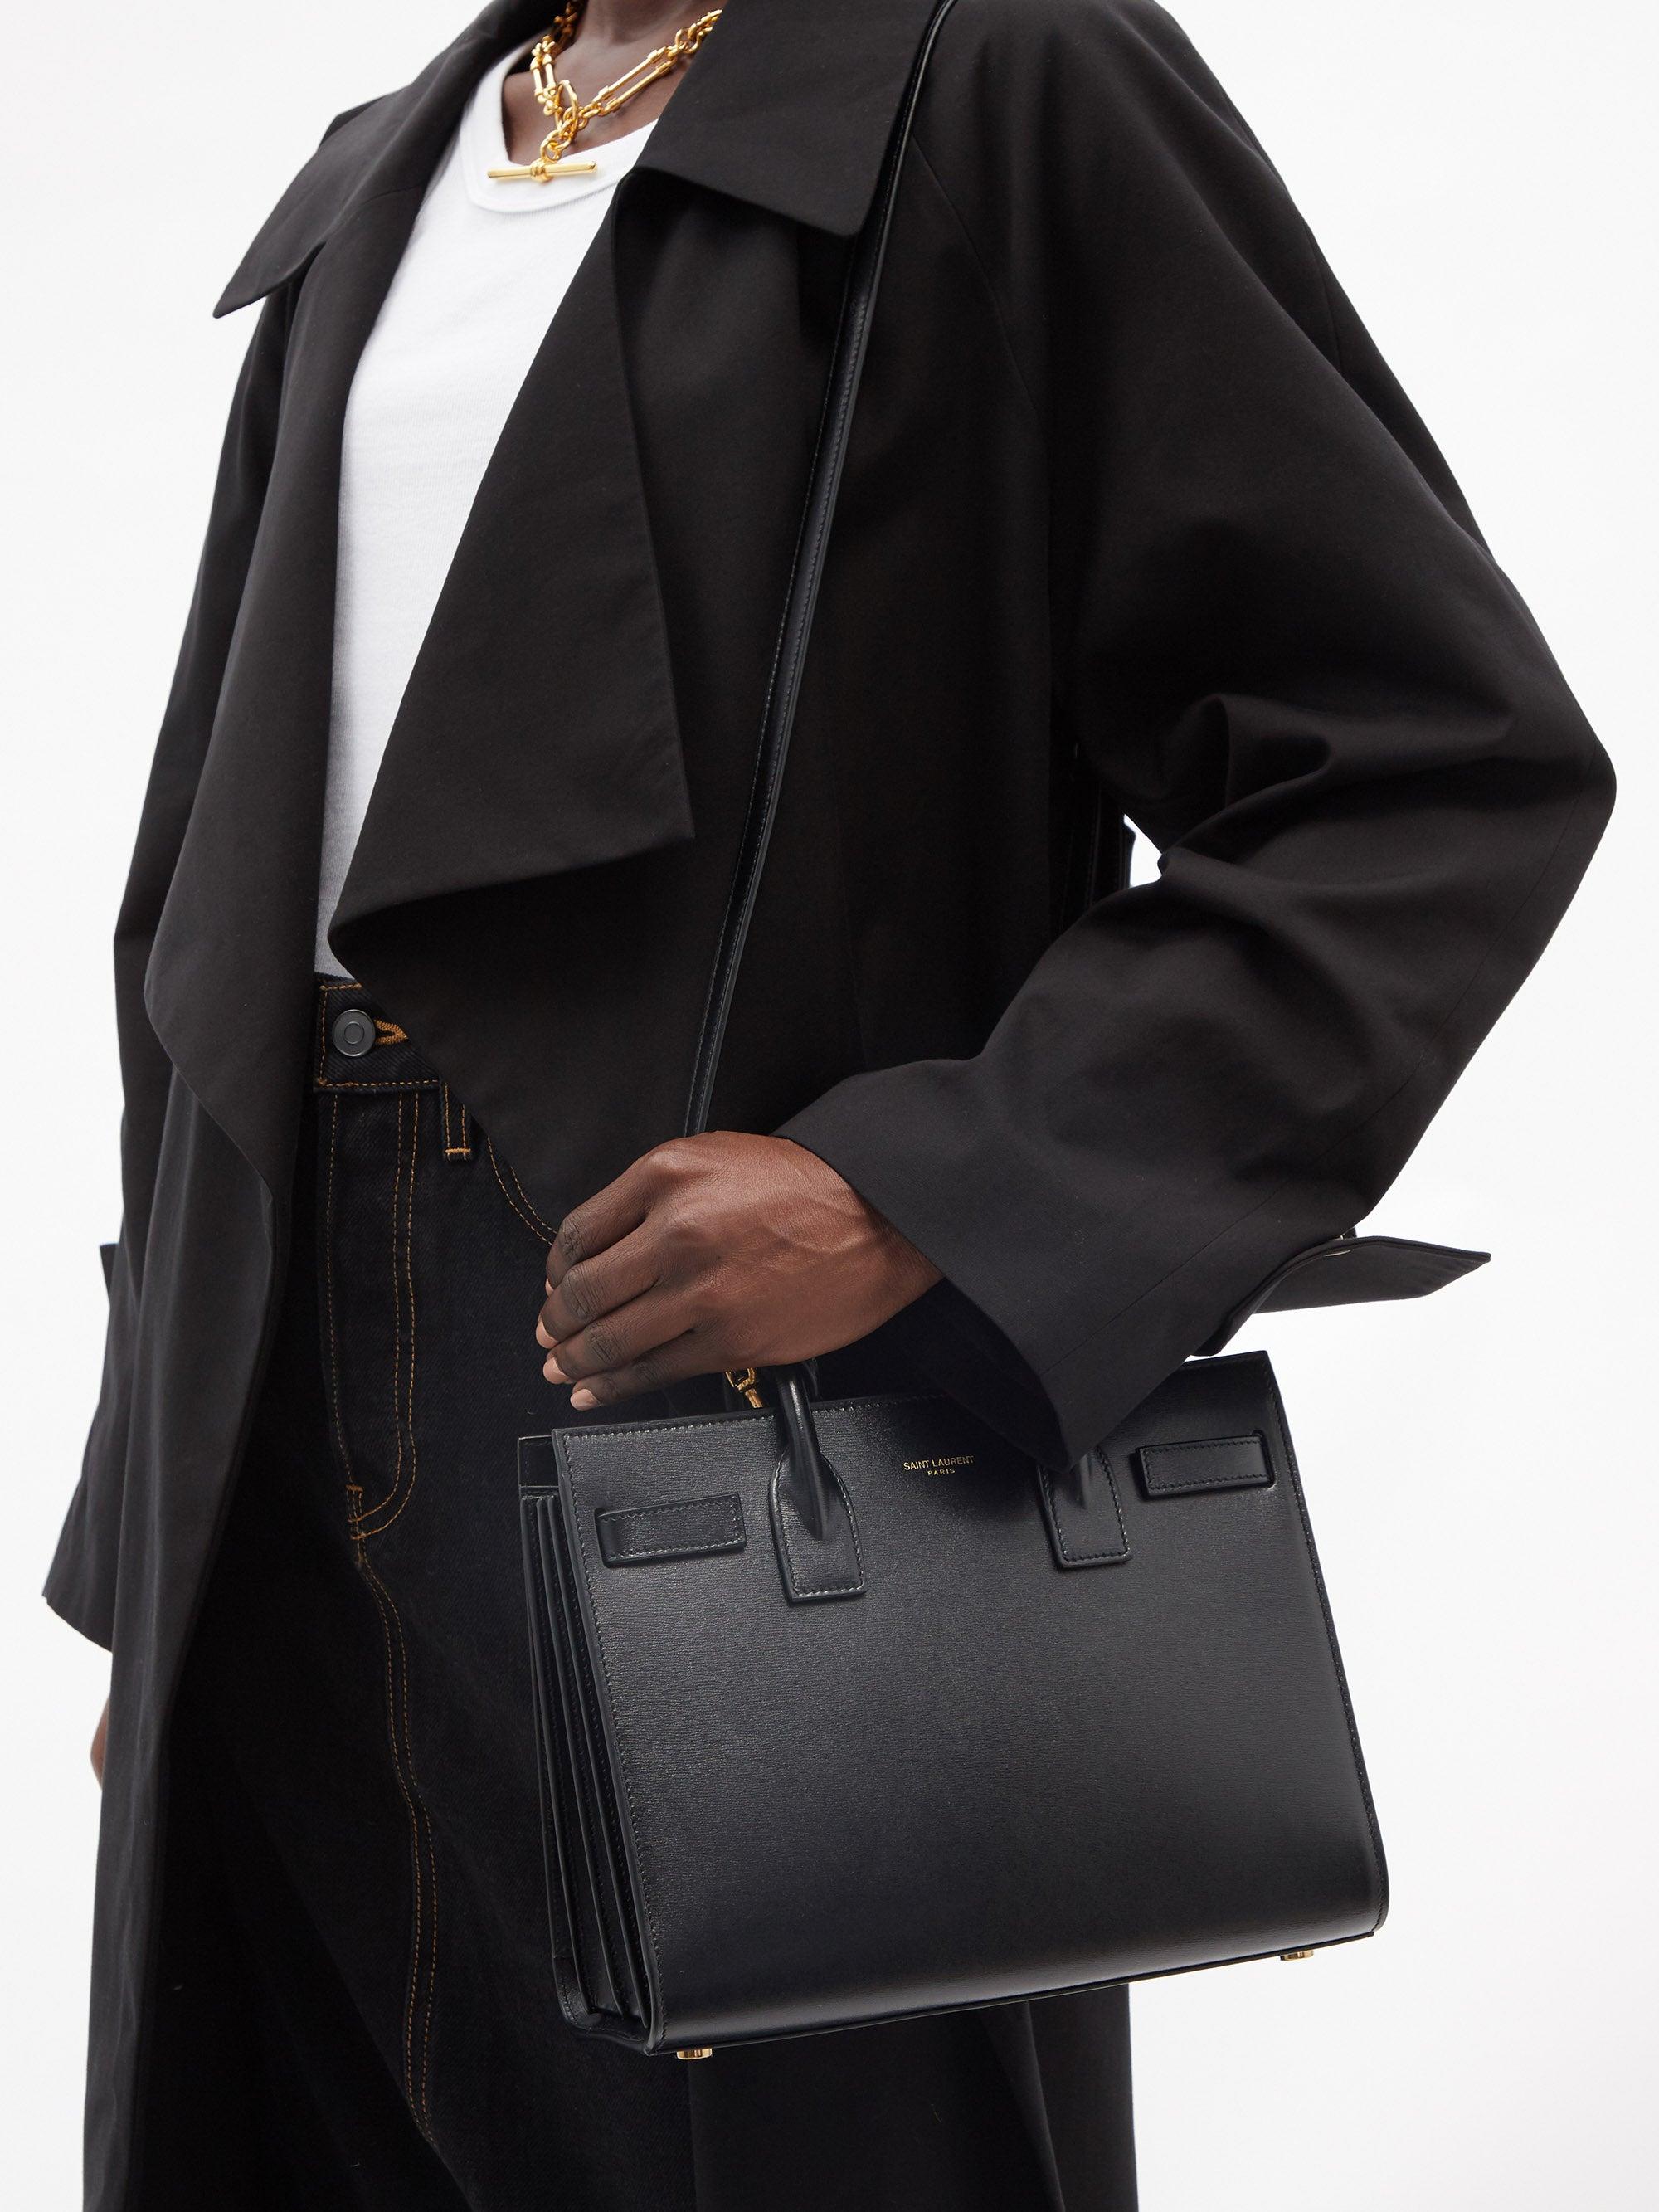 Saint Laurent Sac De Jour Baby Leather Handbag in Black | Lyst